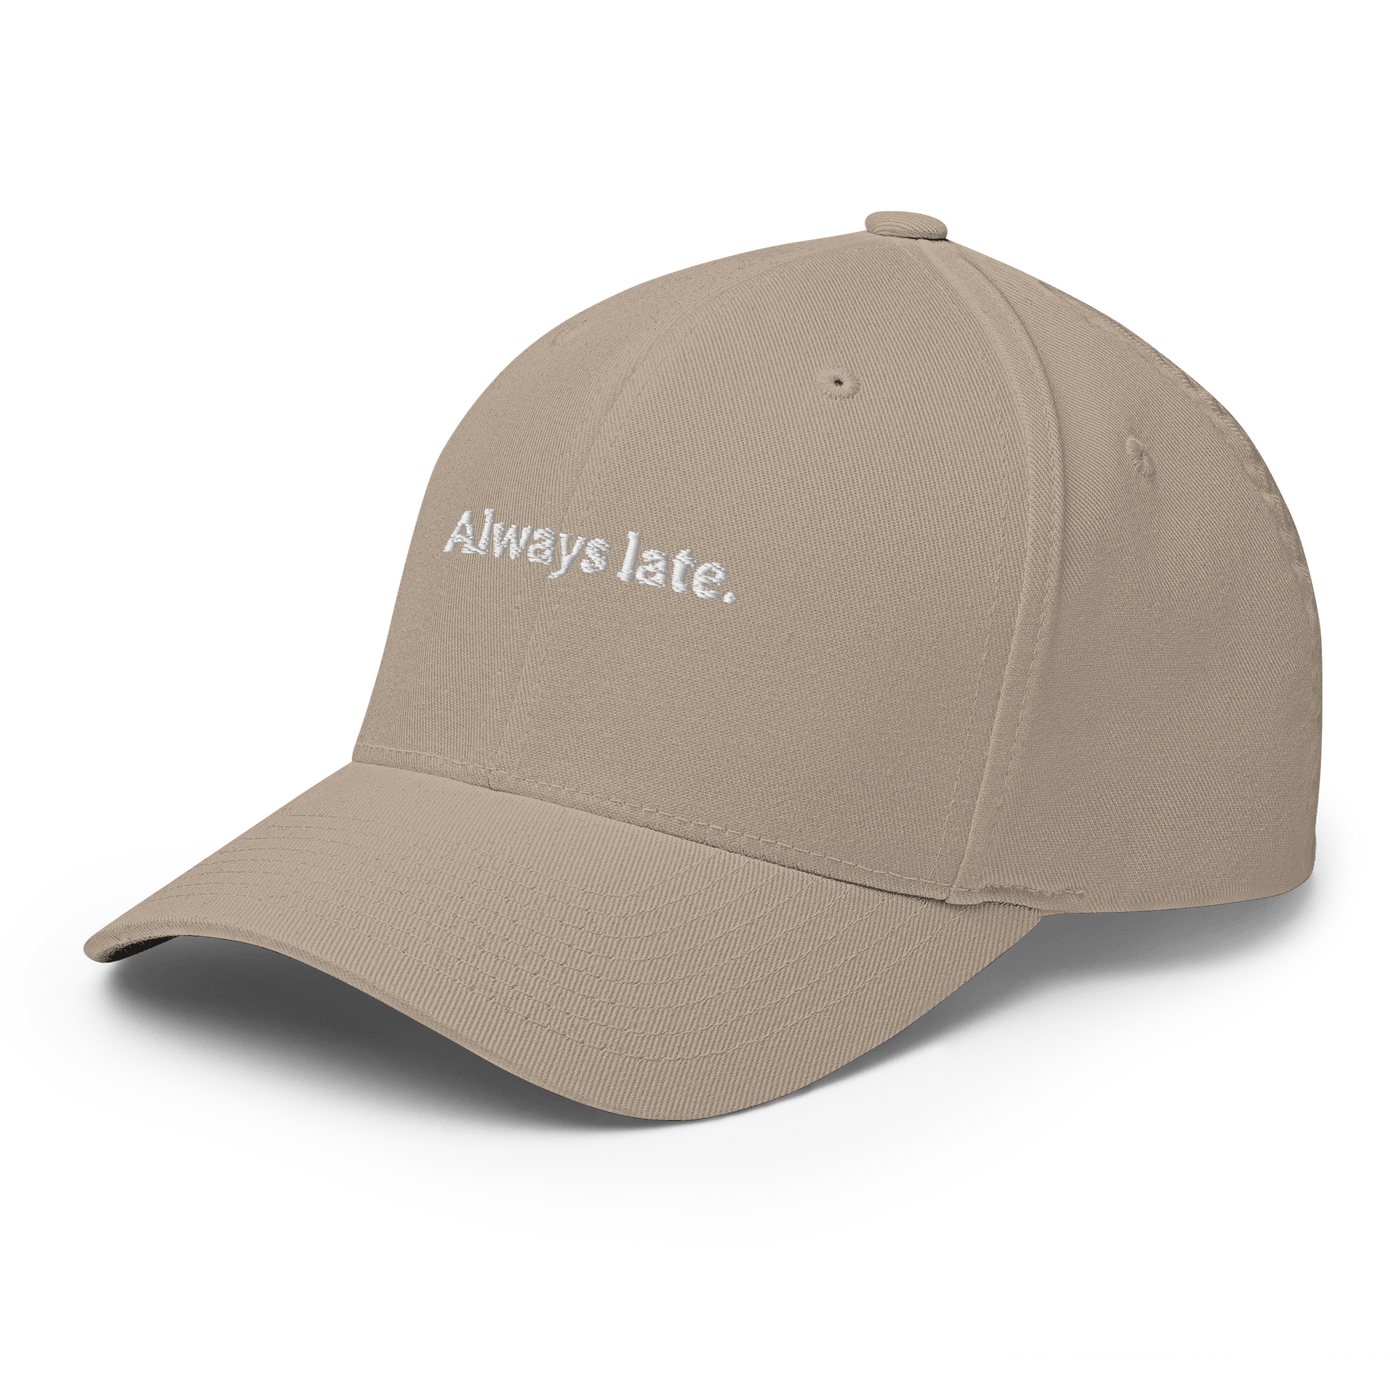 Always Late Flexfit Cap - Khaki - S/M - Just Another Cap Store